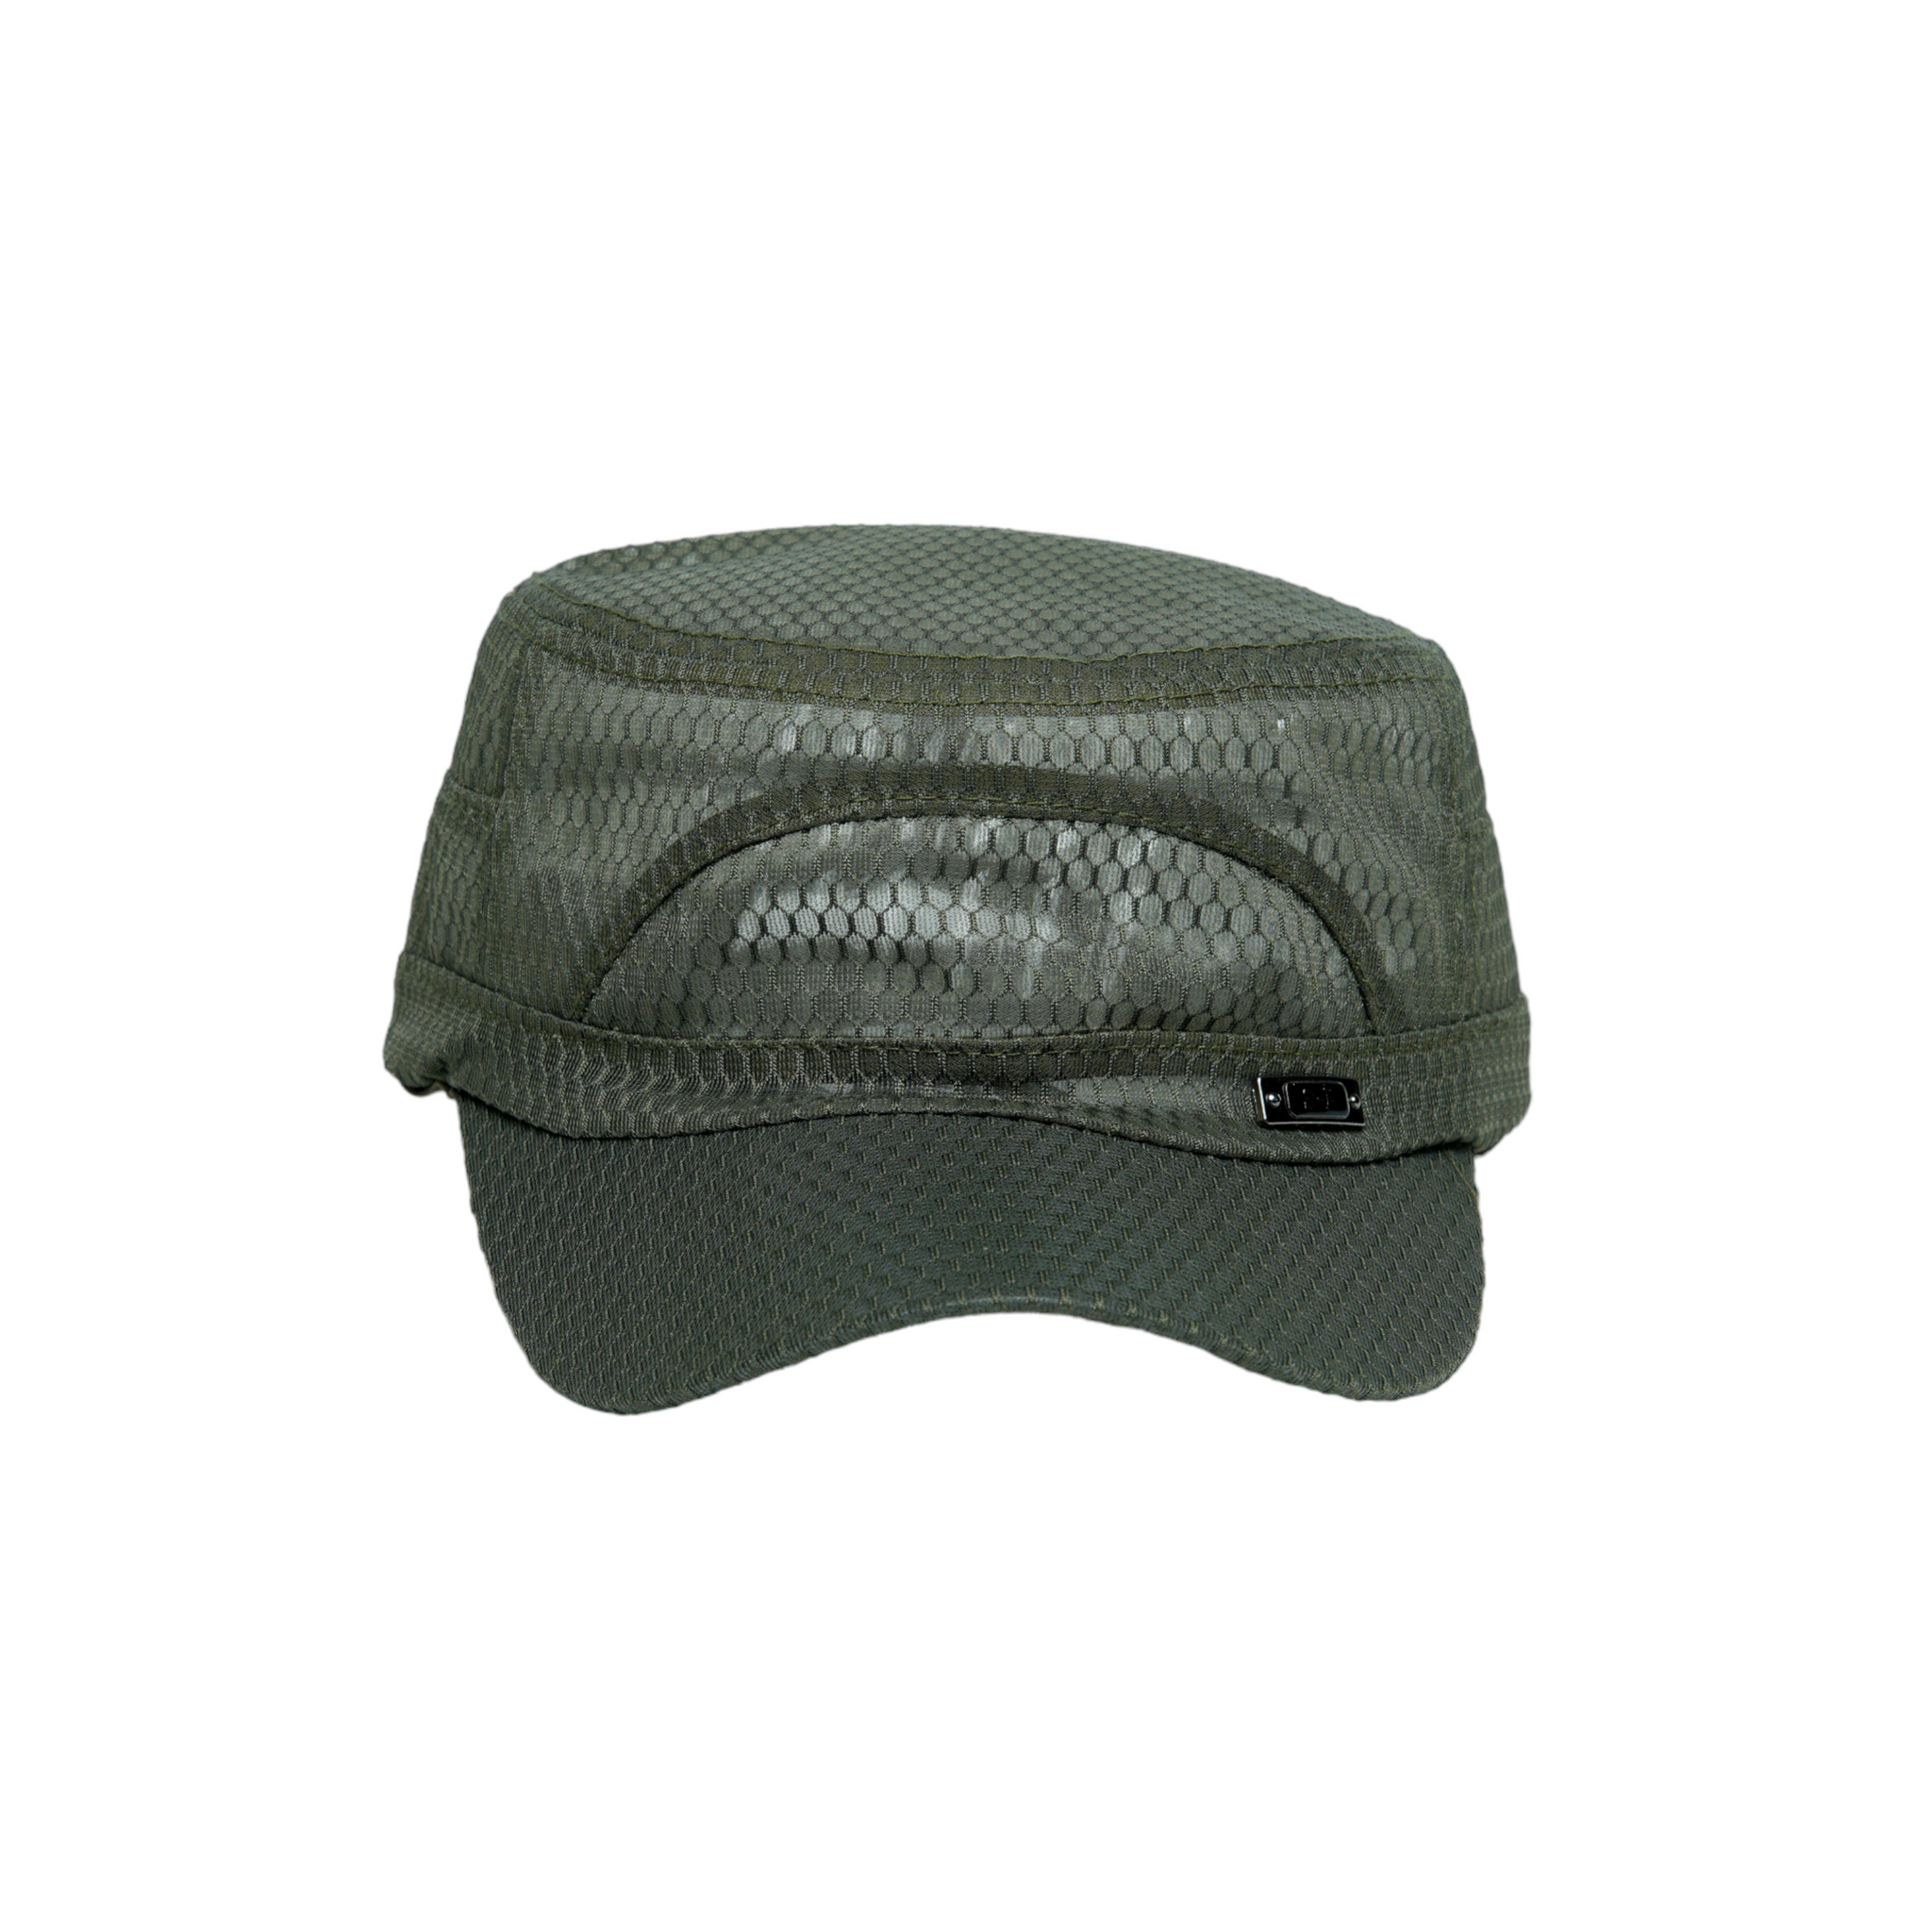 Chokore Summer Flat Top Cap in Mesh Fabric (Army Green)